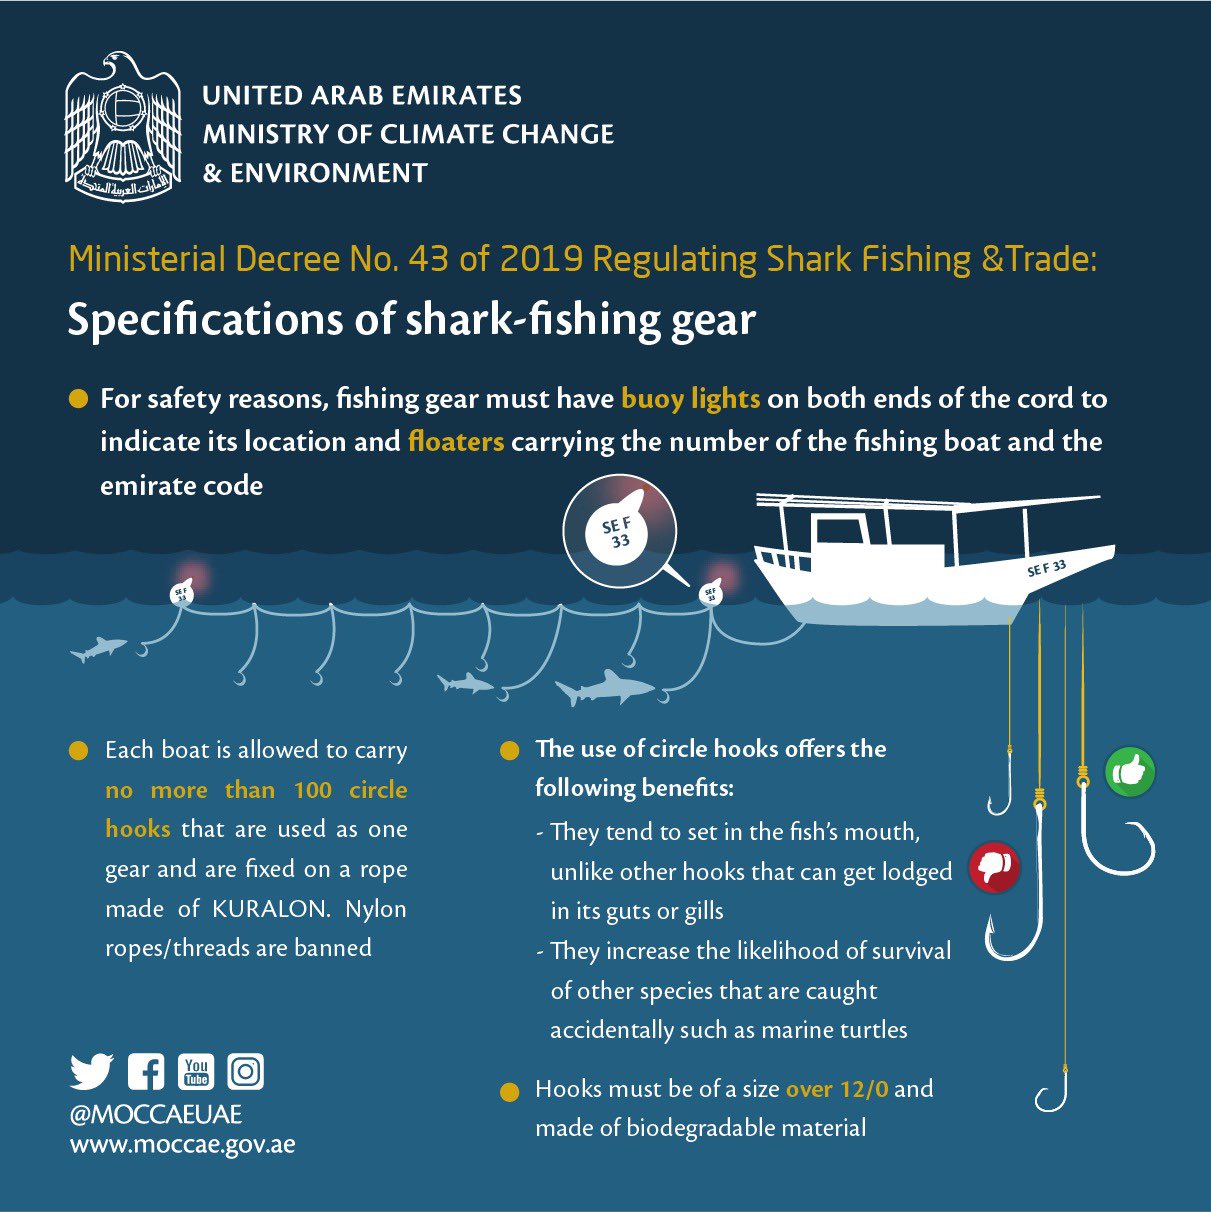 وزارة التغير المناخي والبيئة on X: Explore specifications of #shark-fishing  gear, as outlined in Ministerial Resolution No. (43) of 2019 regulating shark  fishing & trade. View the resolution & more info about